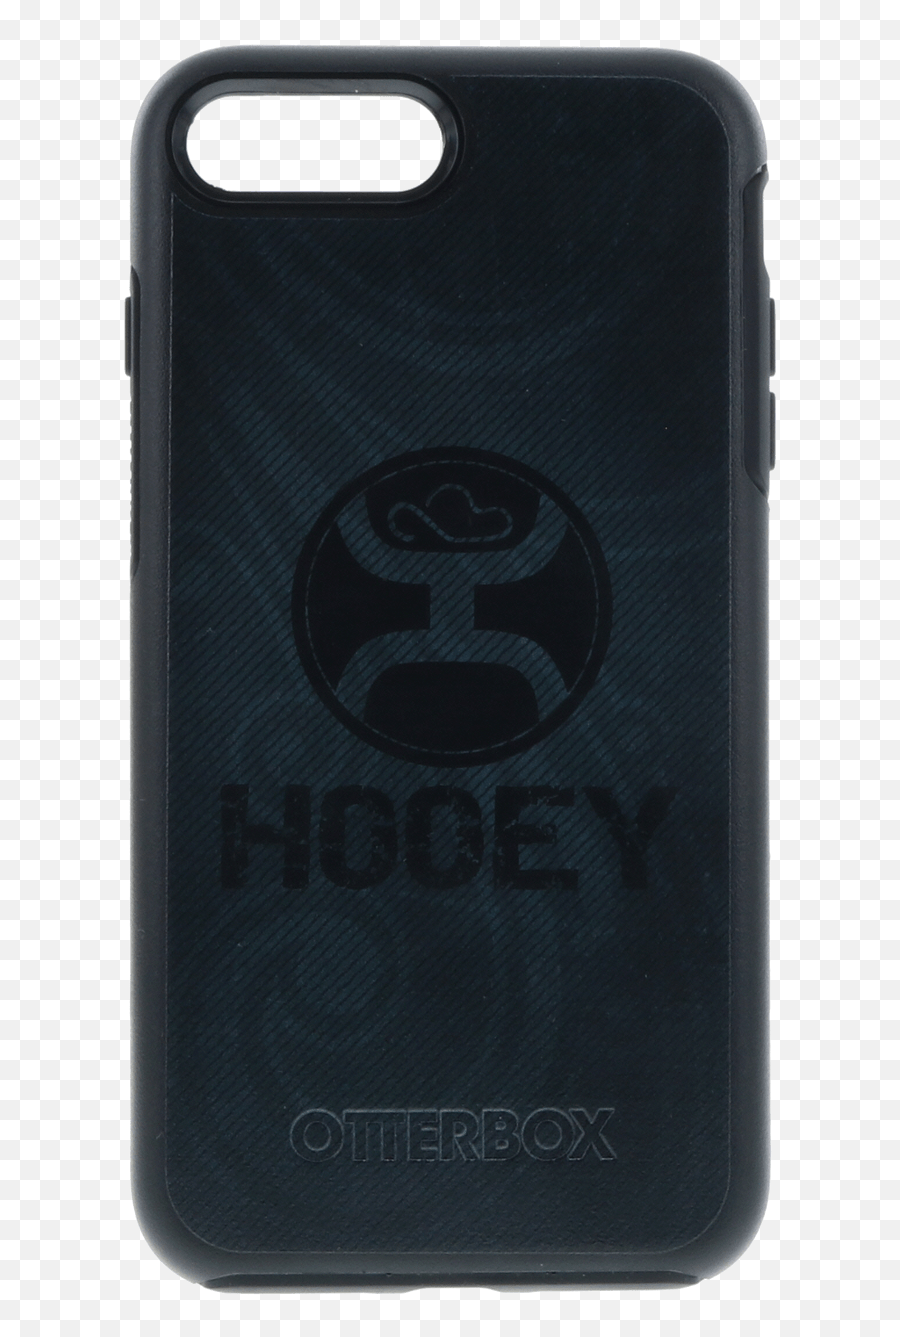 Look What Just Hit The Market Hooey Otterbox Phone Cases - Otter Box Hooey Emoji,Hooey Logo